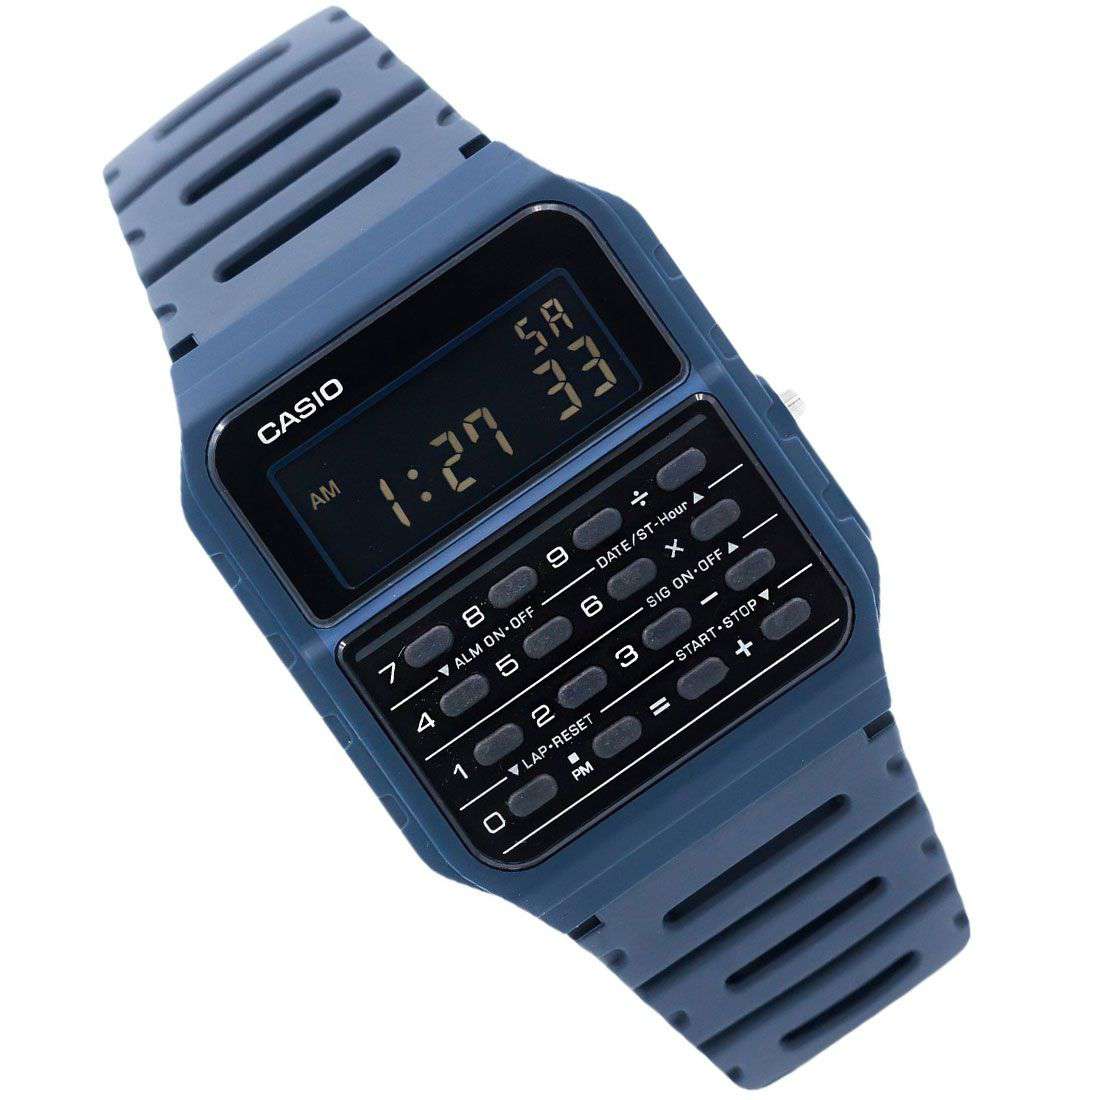 Casio CA-53WF-2B Navy Blue Calculator Resin Watch for Men and Women-Watch Portal Philippines